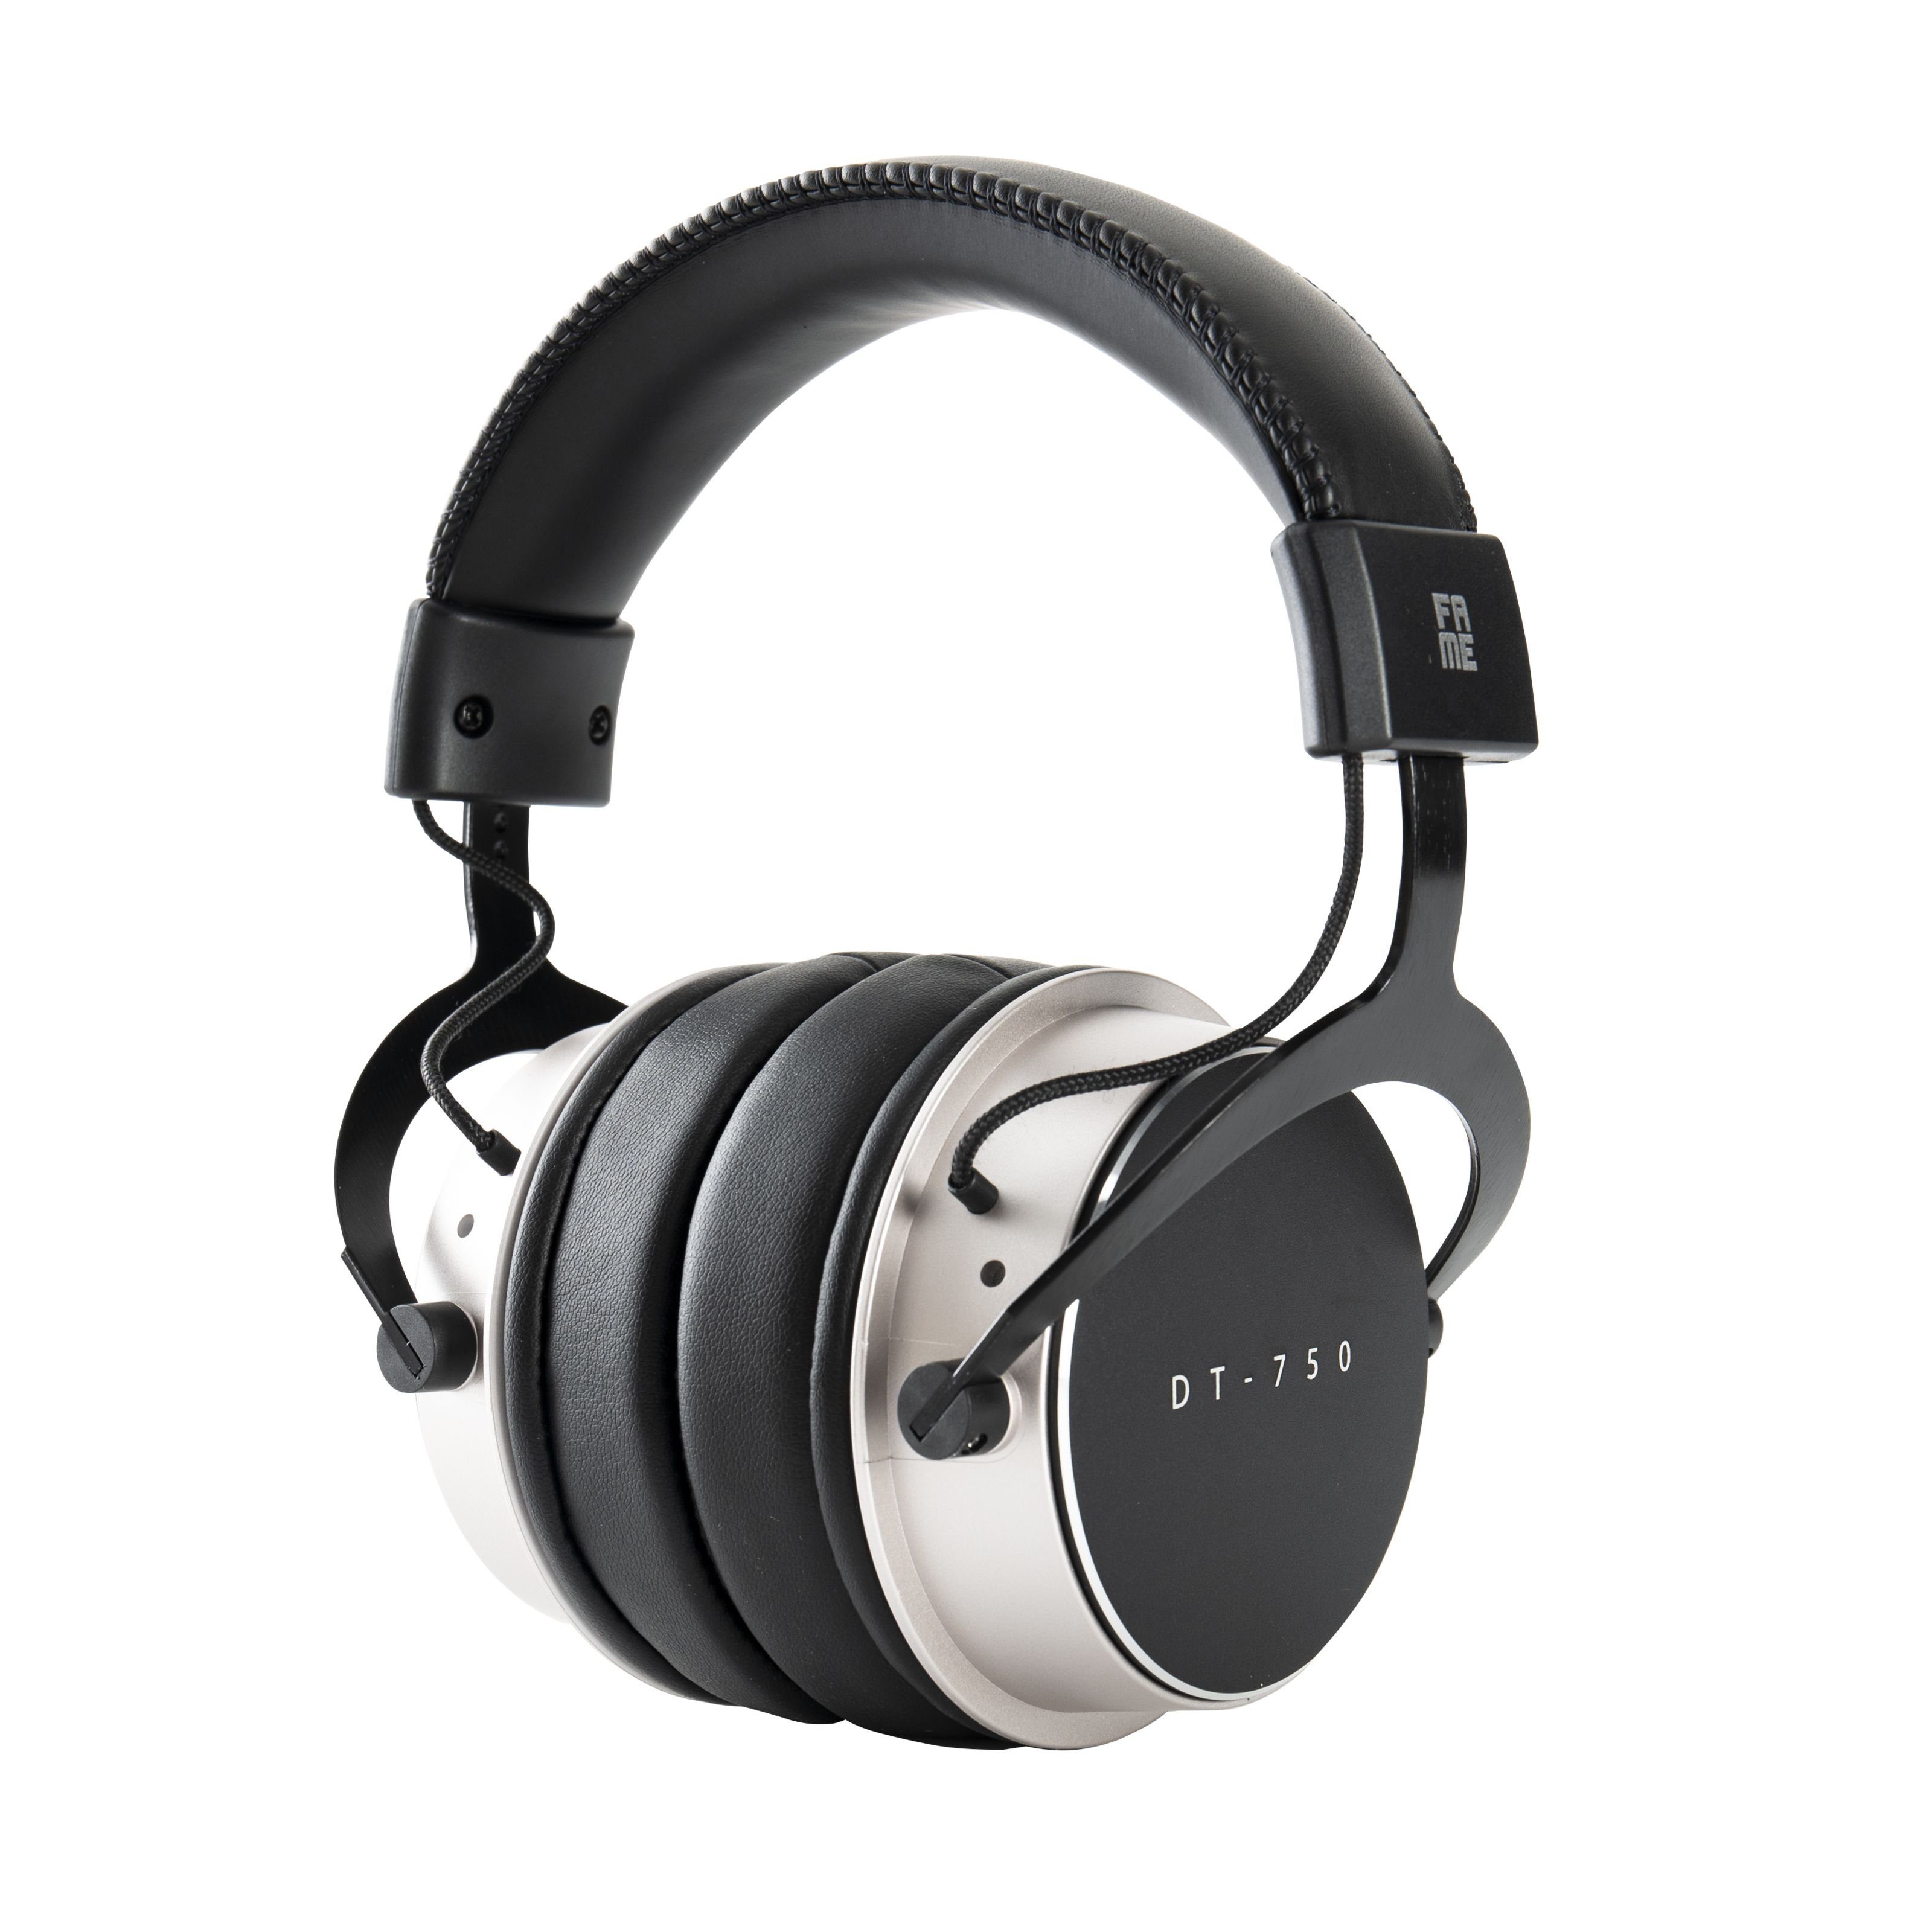 Audio abnehmbaren Kopfhörer (DT-750 Kopfhörer Kabel) Kopfhörer, mit geschlossen Fame Studio